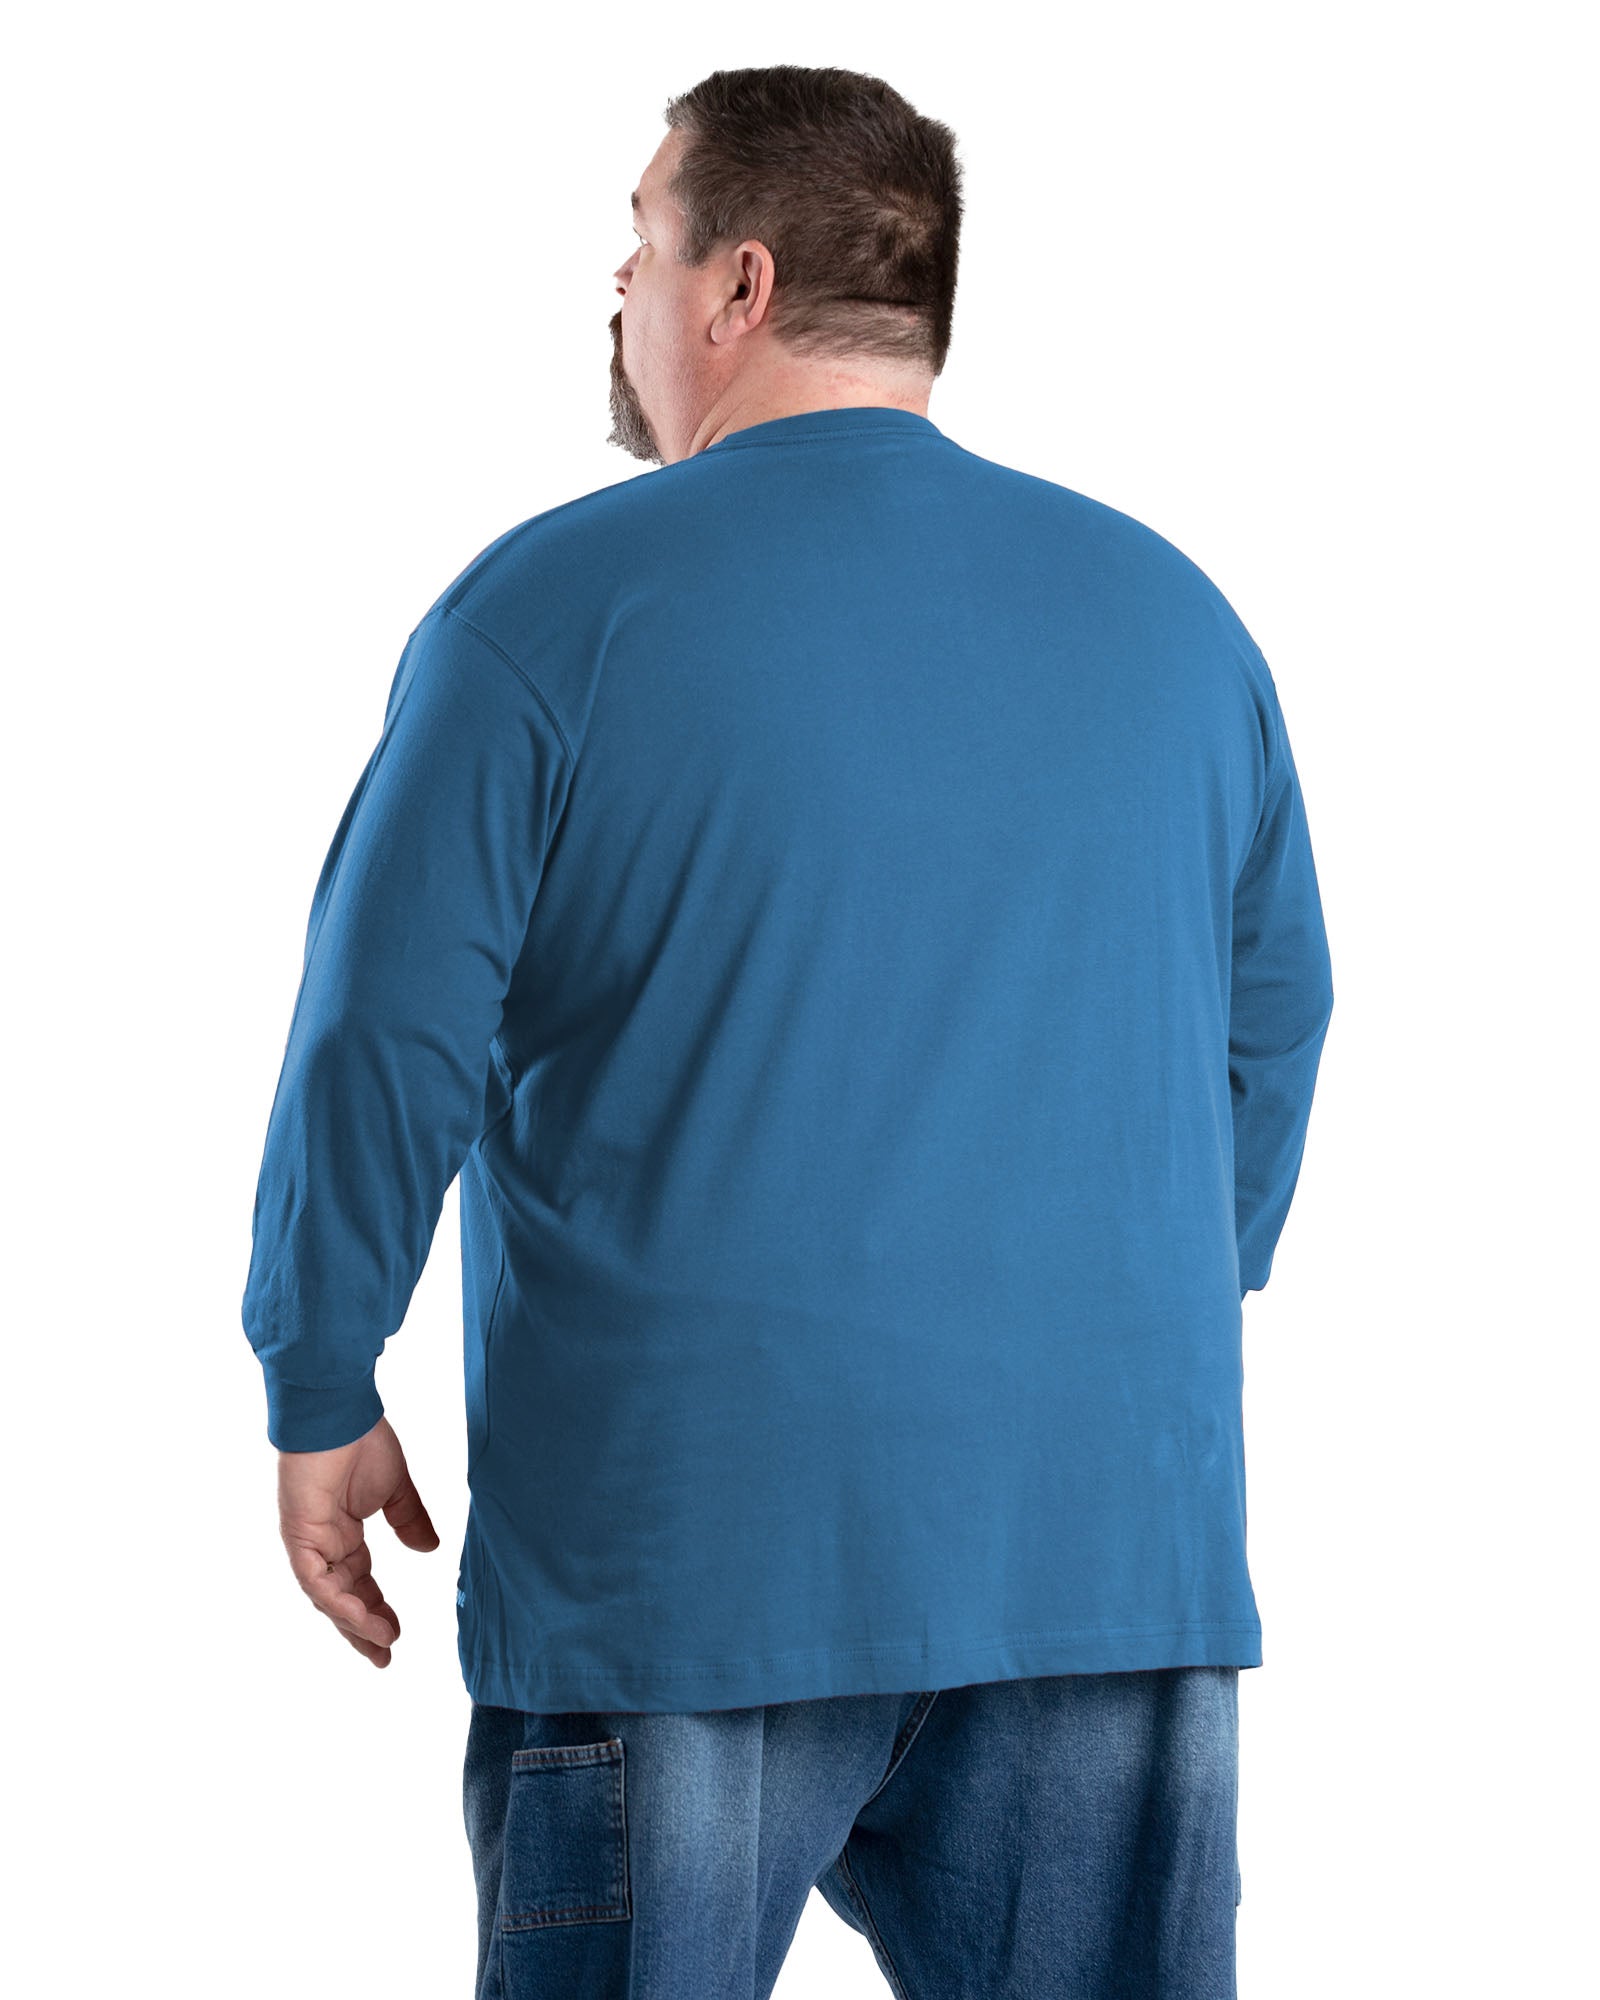 Heavyweight Long Sleeve Pocket T-Shirt